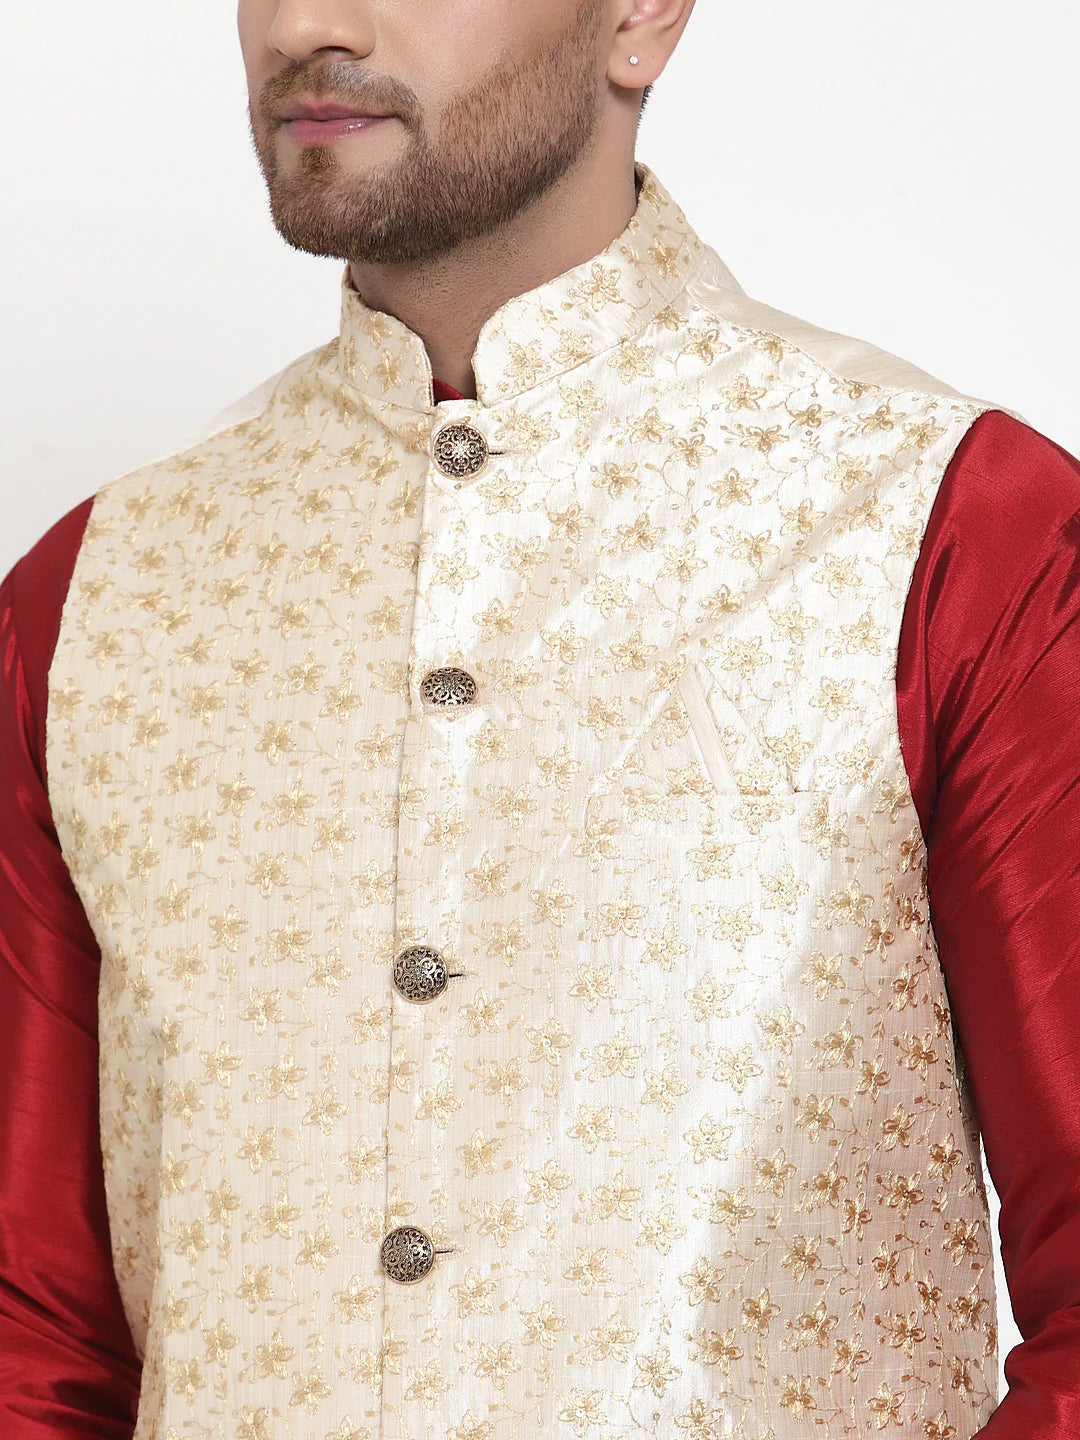 Jompers Men's Solid Dupion Kurta Pajama with Embroidered Nehru Jacket ( JOKPWC M-D 4015Cream )